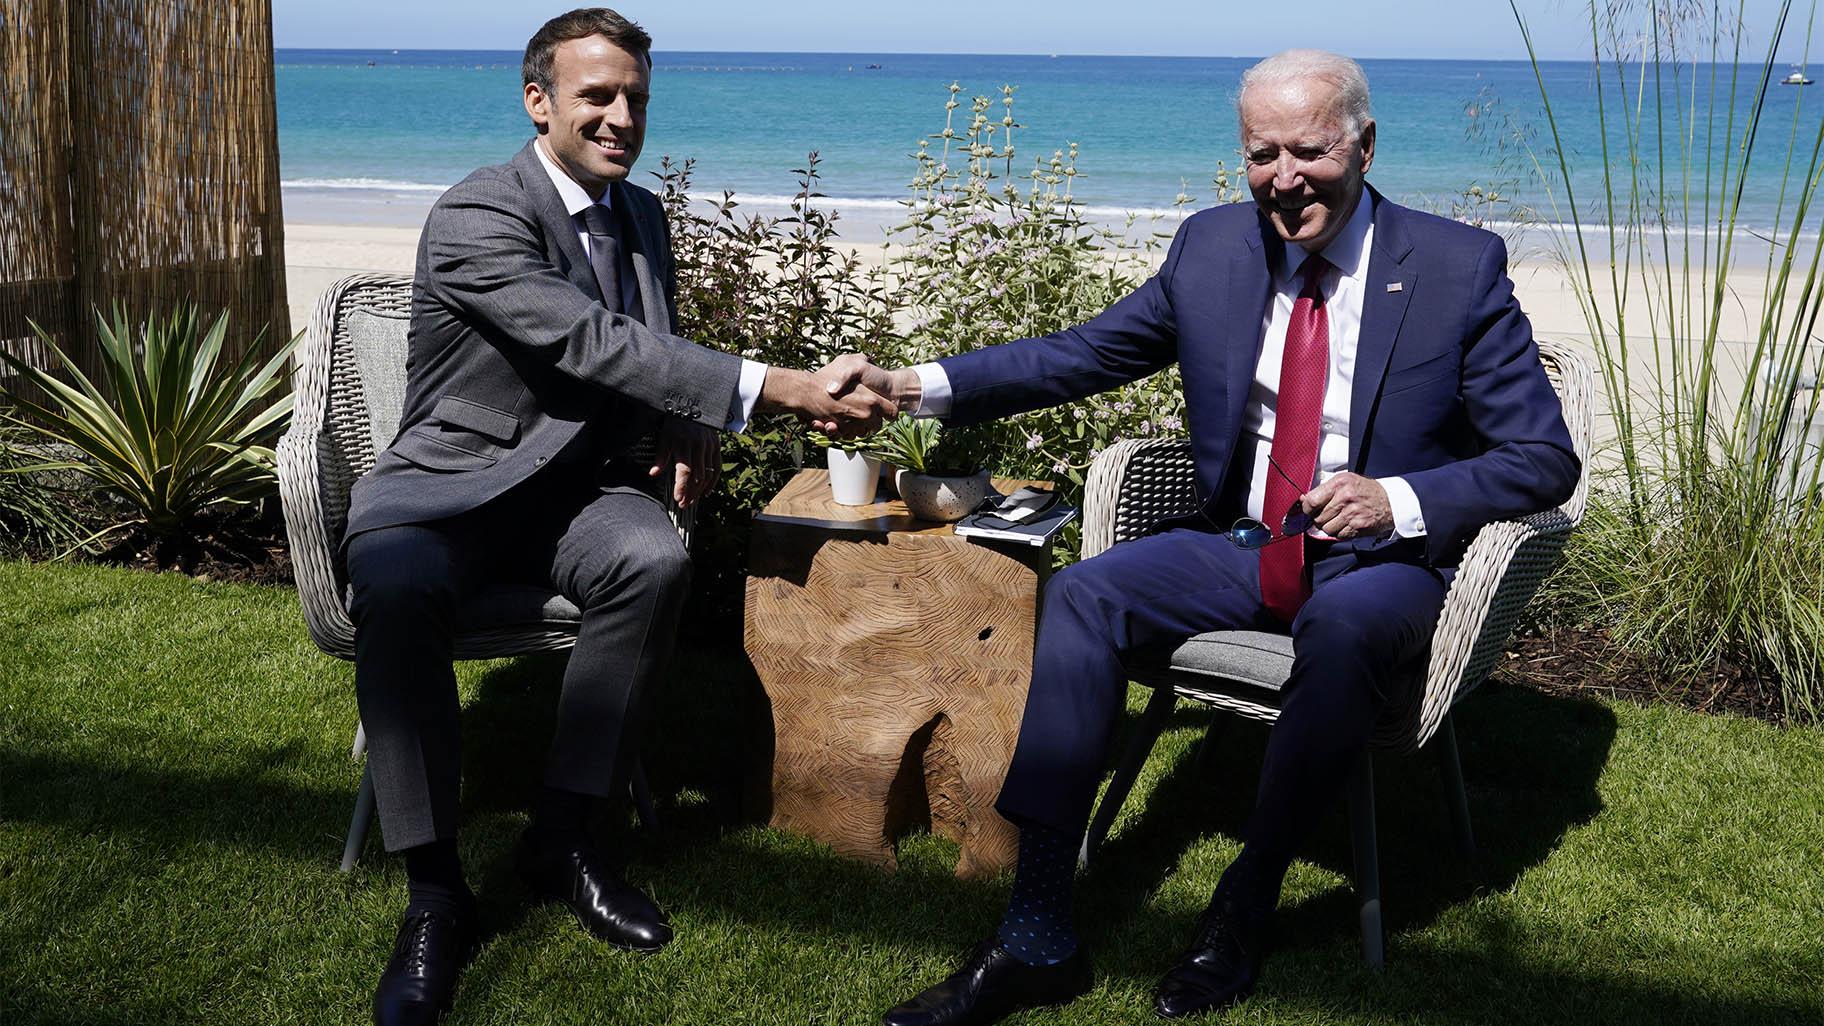 President Joe Biden and French President Emmanuel Macron visit during a bilateral meeting at the G-7 summit, Saturday, June 12, 2021, in Carbis Bay, England. (AP Photo / Patrick Semansky)